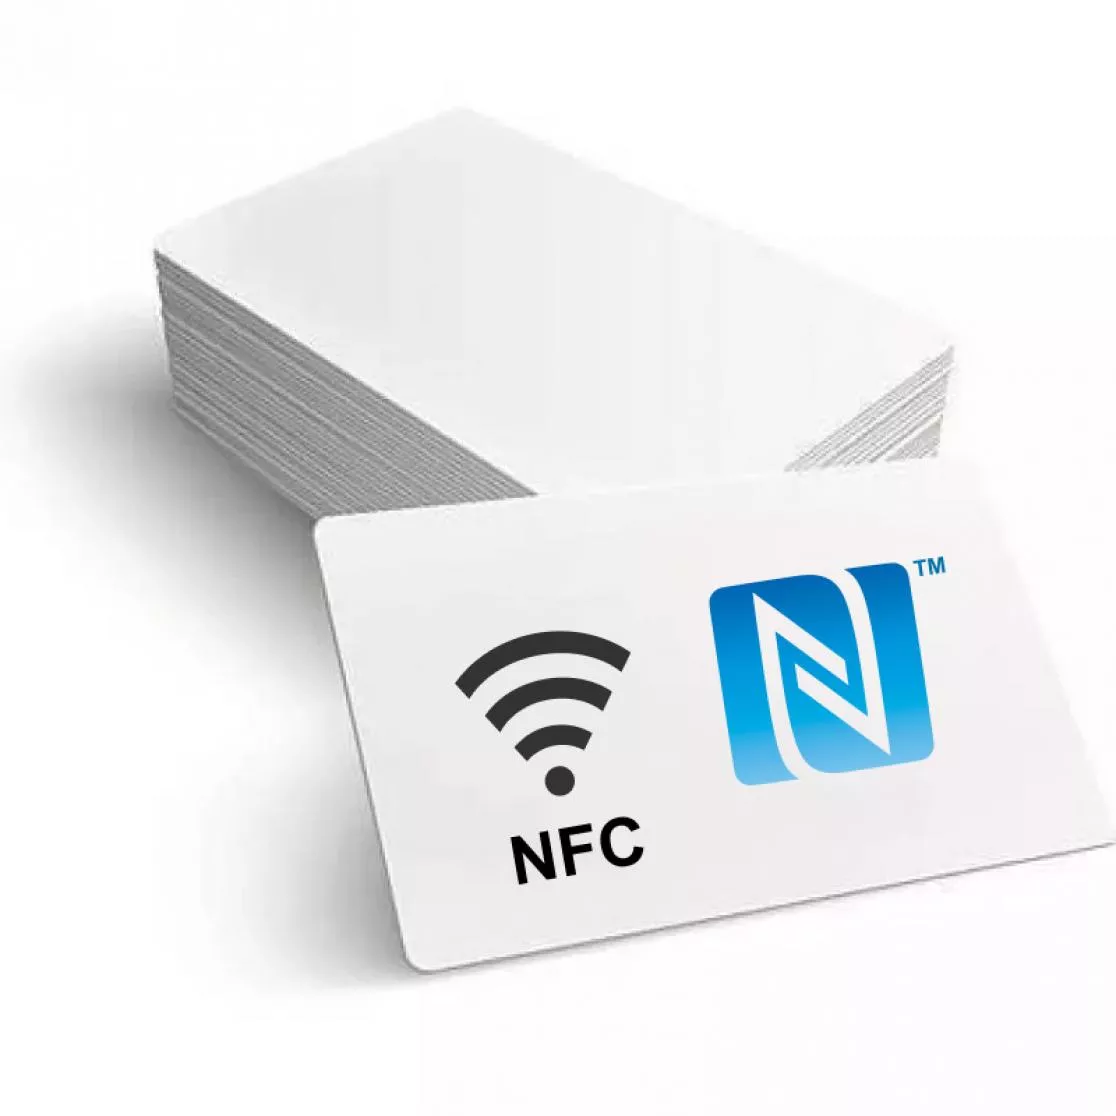 NFC Mifare Desfire EV1 2K cards